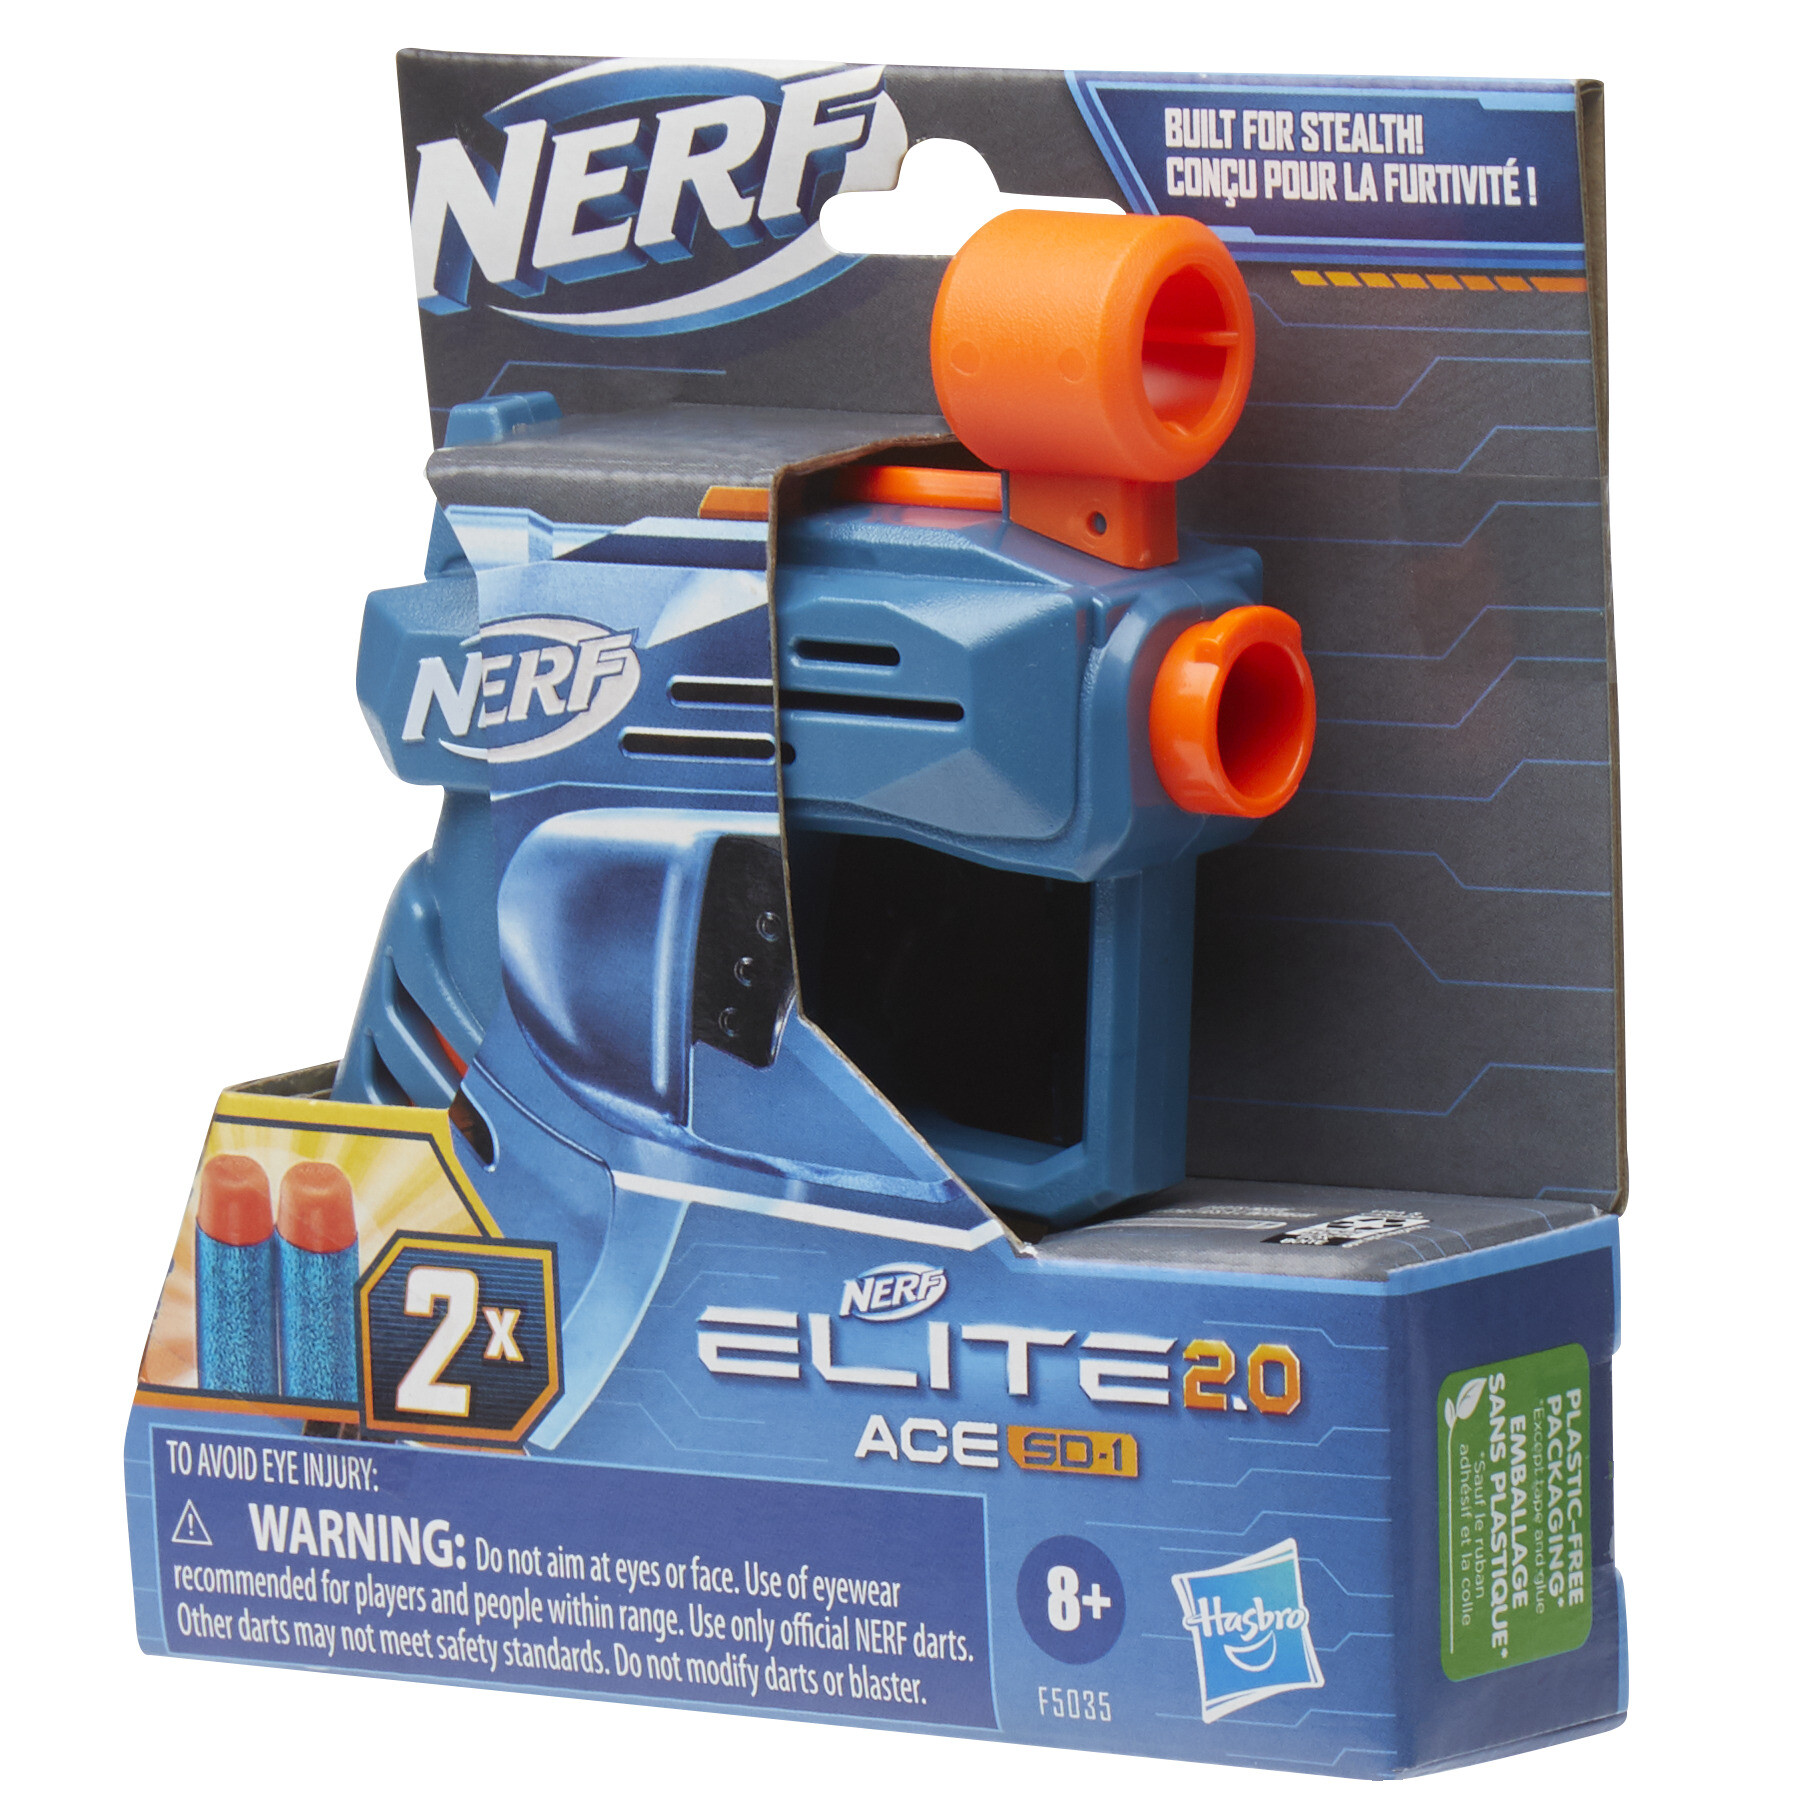 Nerf elite 2.0 - blaster ace sd-1, con 2 dardi originali nerf elite e portadardi da 1 , per lanci furtivi, facile da usare - NERF